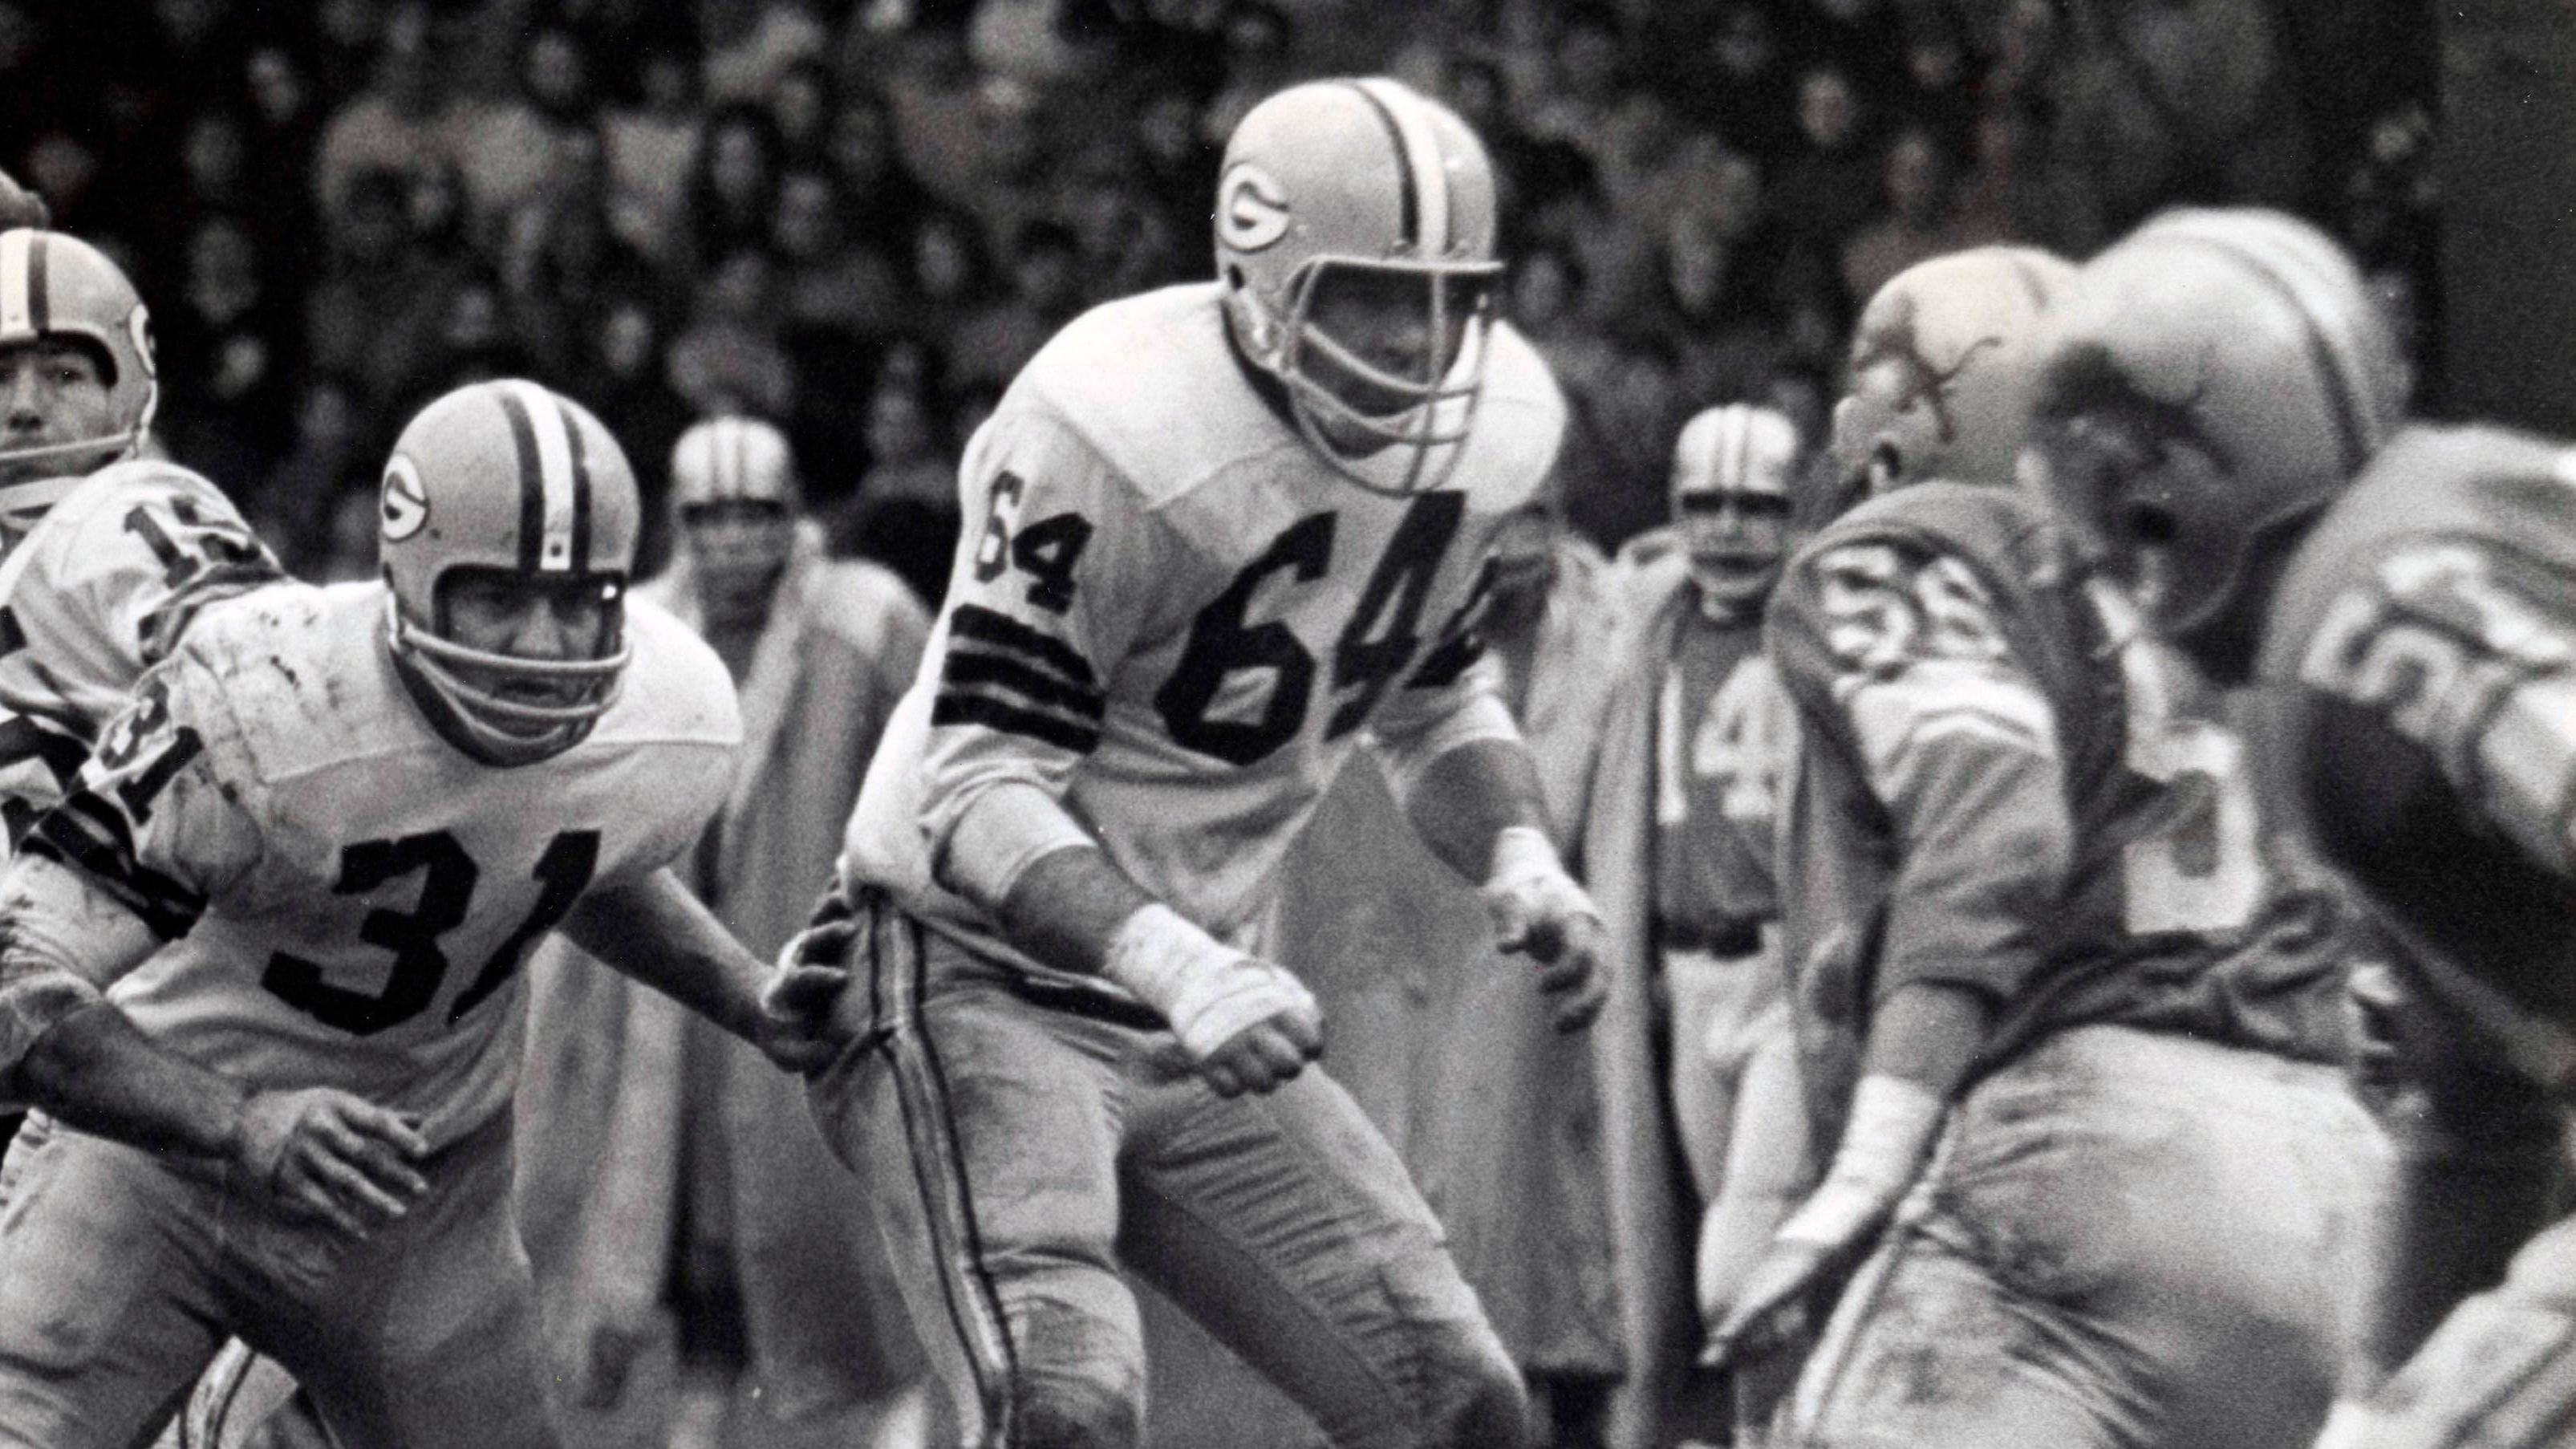 <strong>64: Jerry Kramer </strong><br>Team: Green Bay Packers<br>Position: Offensive Guard, Kicker<br>Erfolge: Pro Football Hall of Famer, fünfmaliger NFL-Champion, zweimaliger Super-Bowl-Champion, fünfmaliger First Team All-Pro<br>Honorable Mention: Randall McDaniel